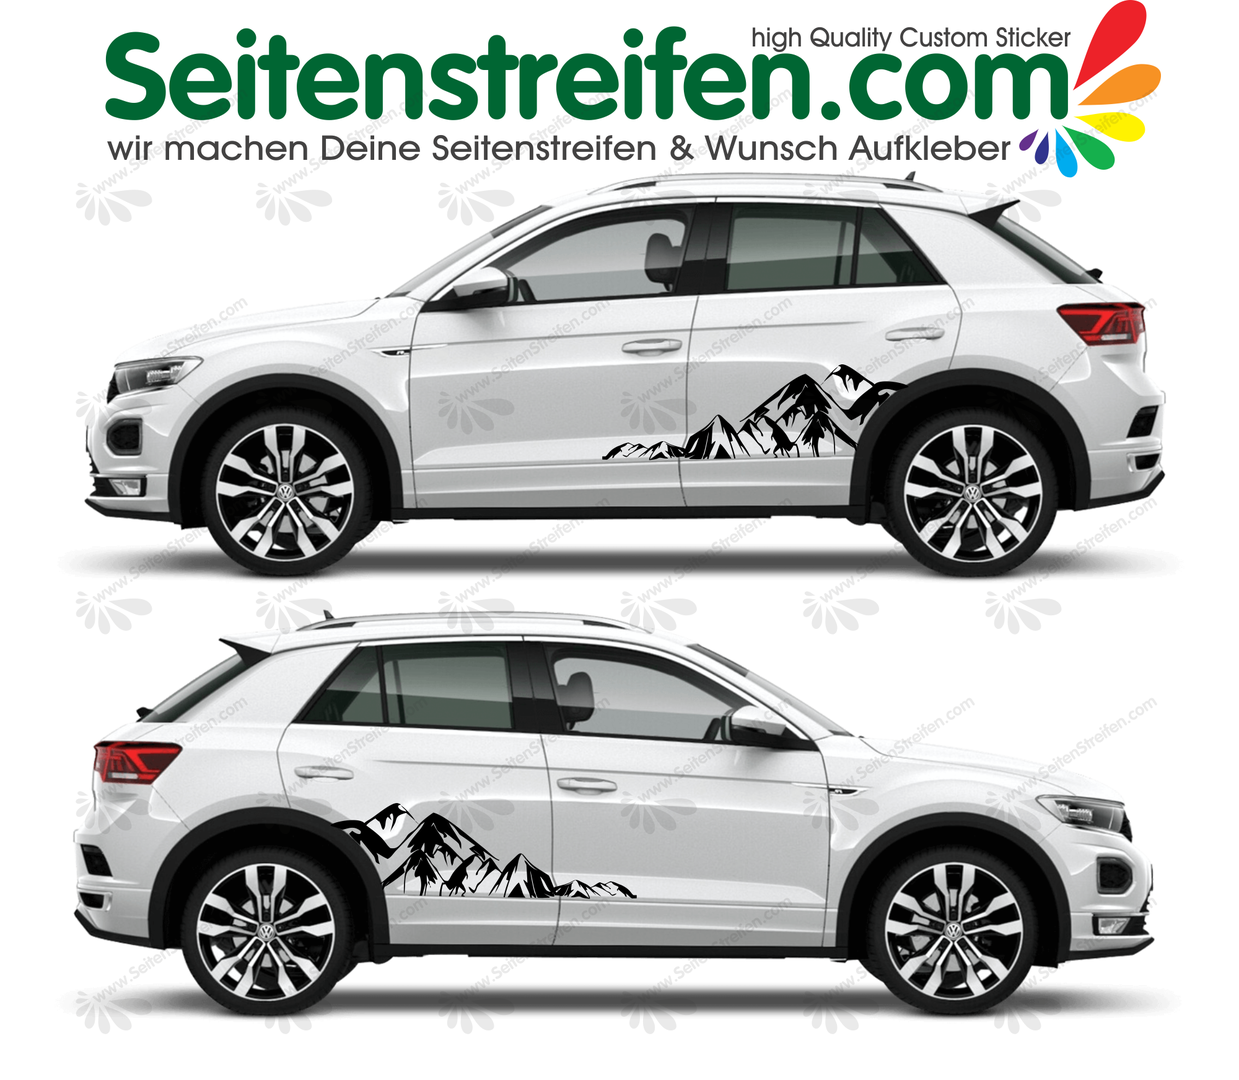 VW T-Roc montaña outdoor sticker adhesivo pegatinas laterales - 5615